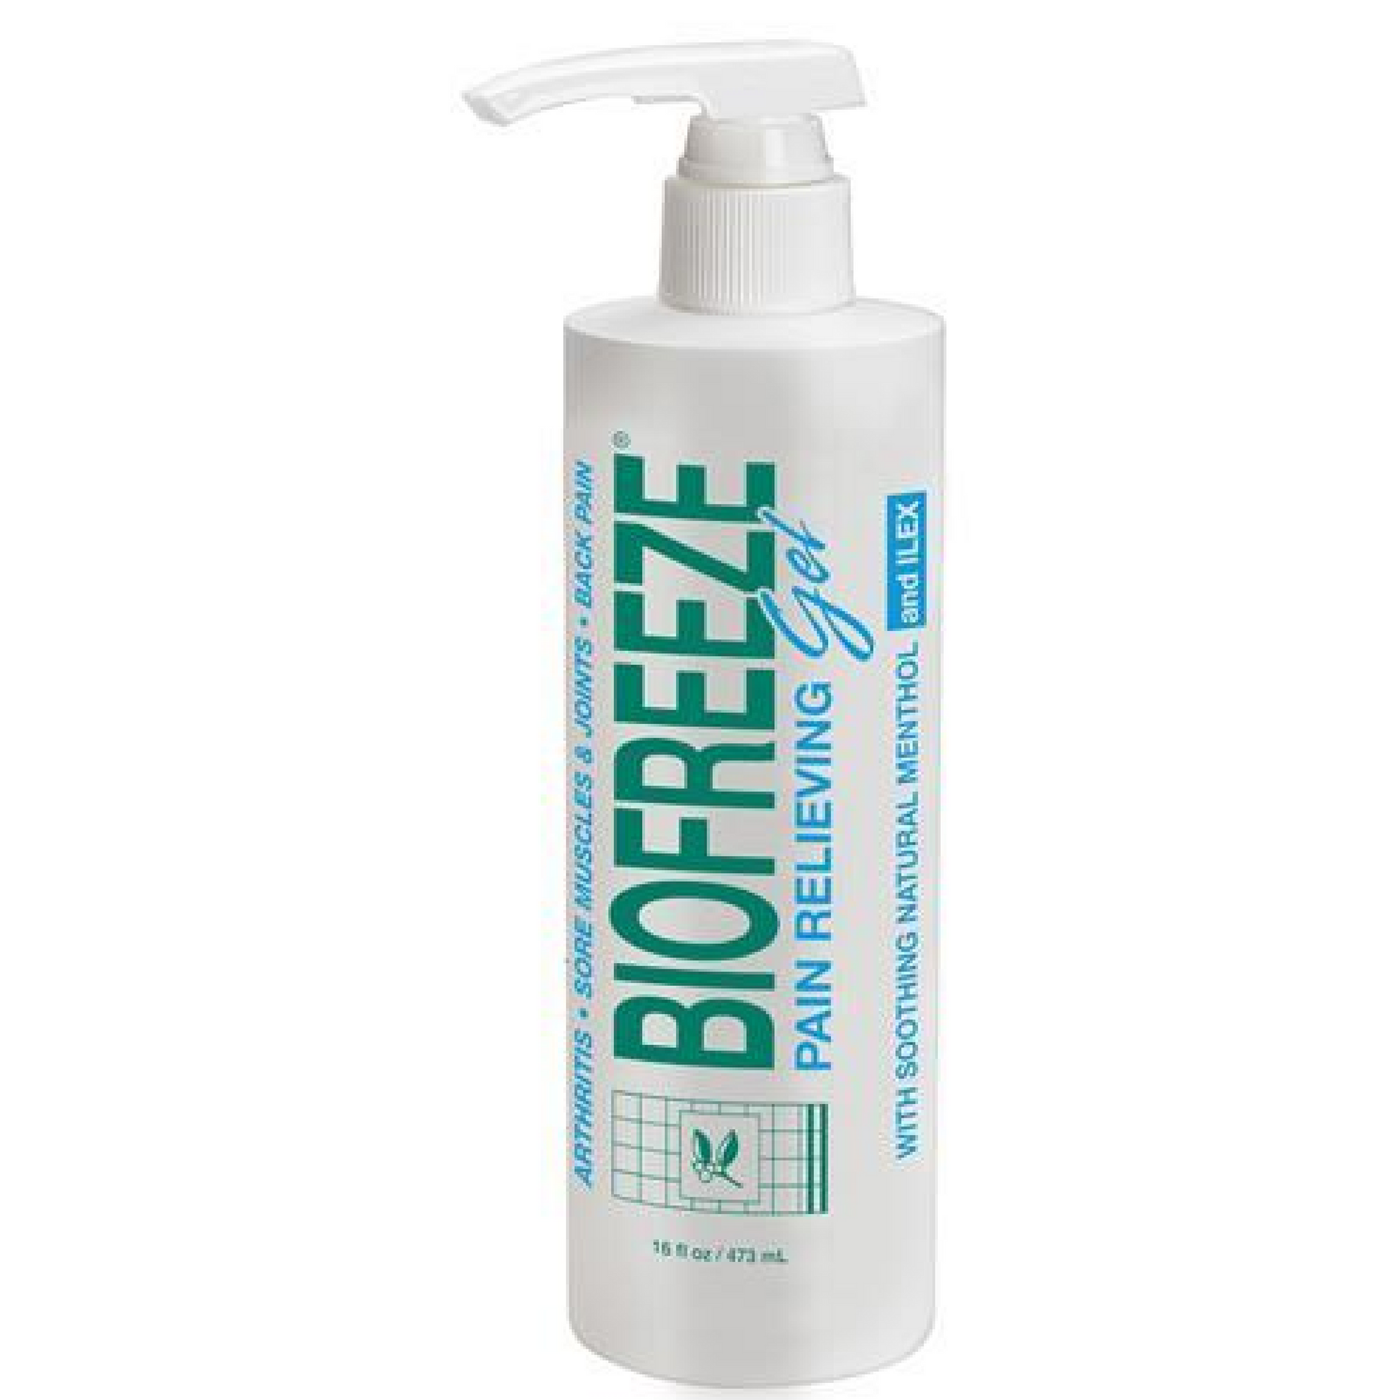 BioFreeze Product